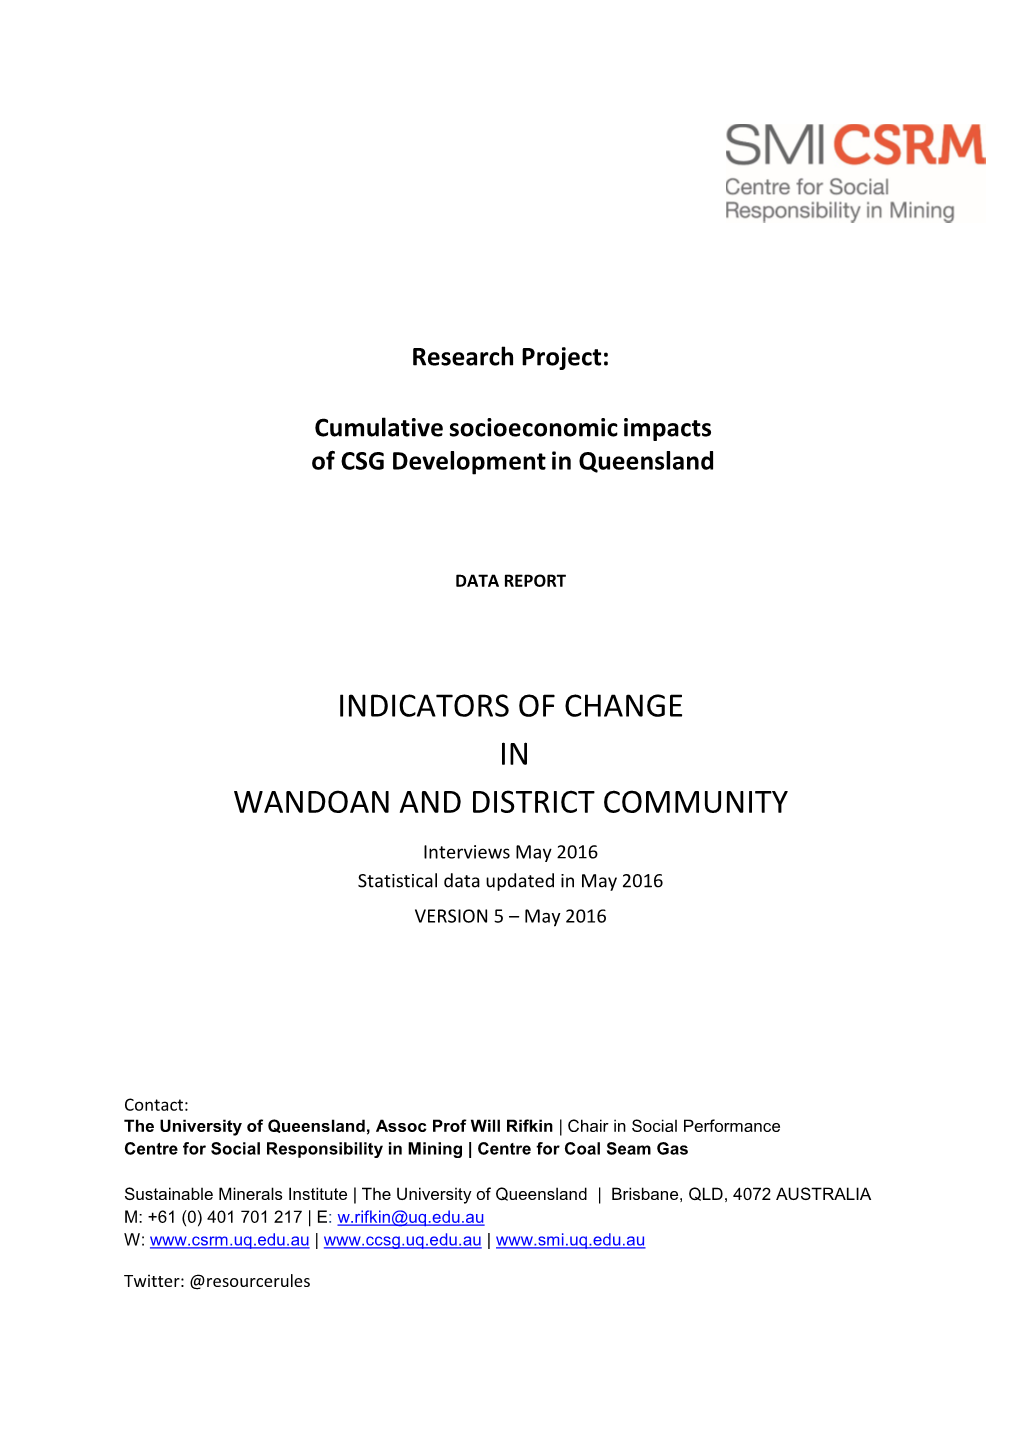 Wandoan and District Community